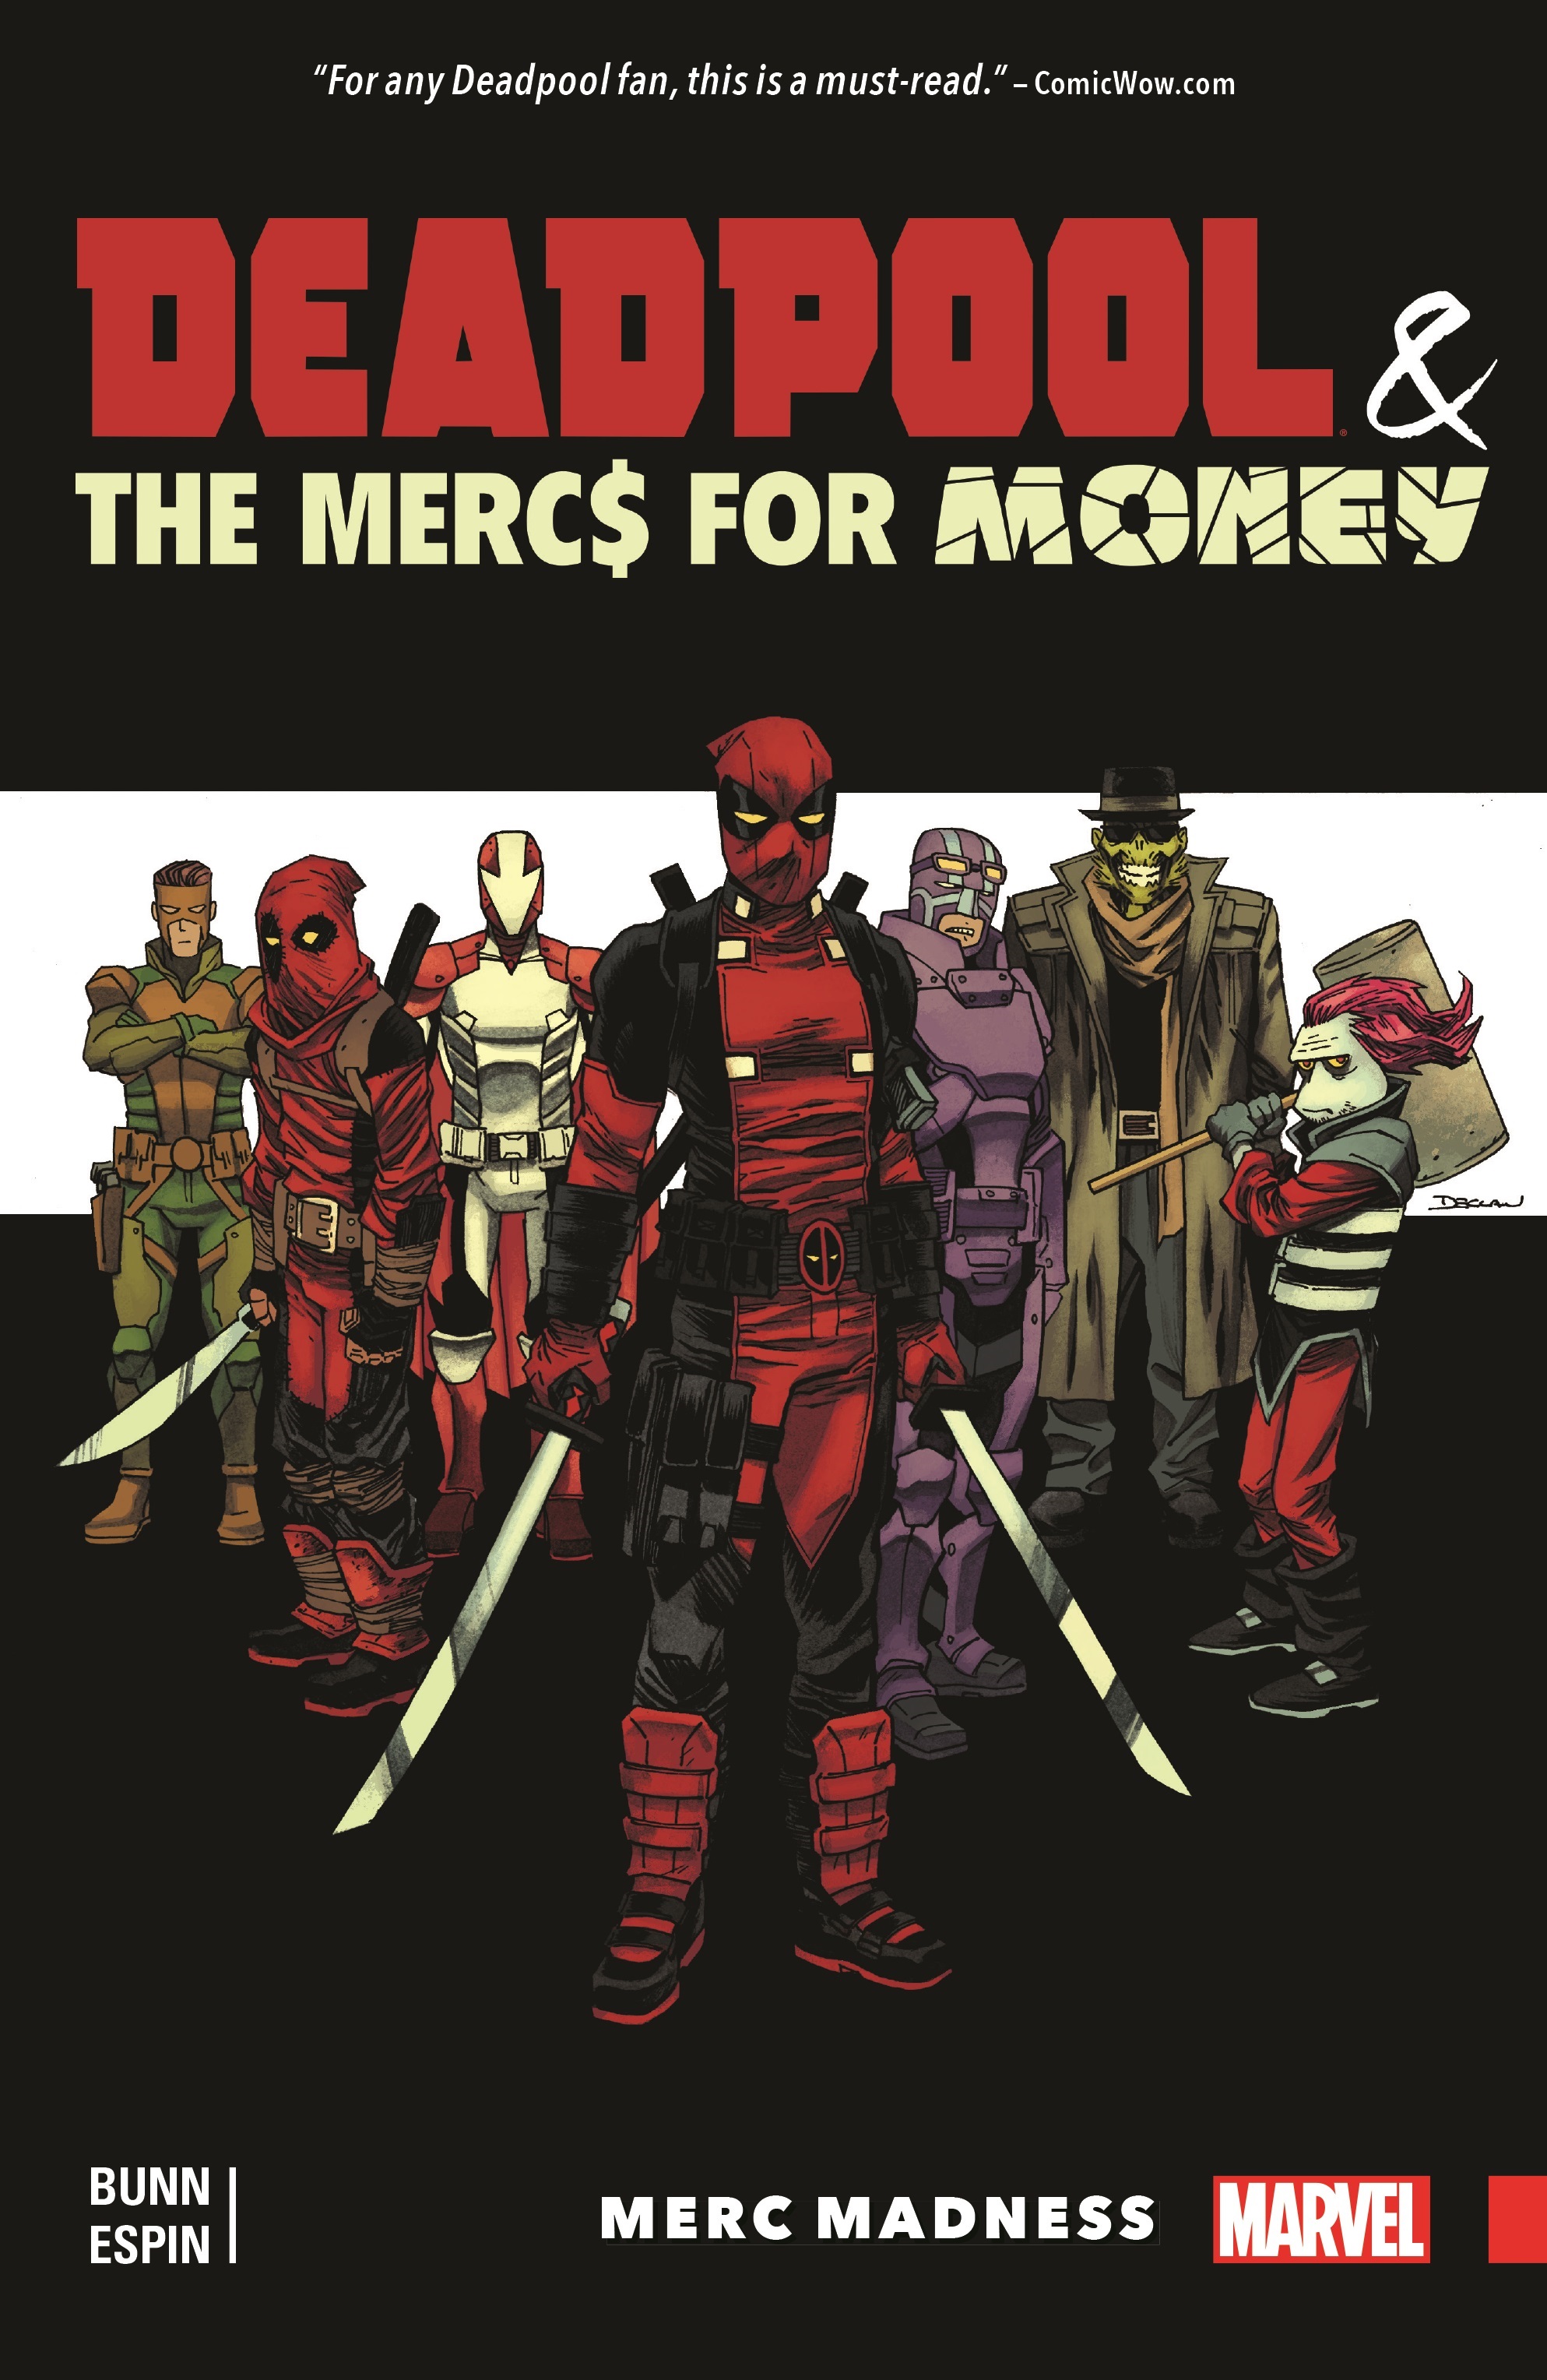 Deadpool & The Mercs for Money Vol. 0: Merc Madness (Trade Paperback)